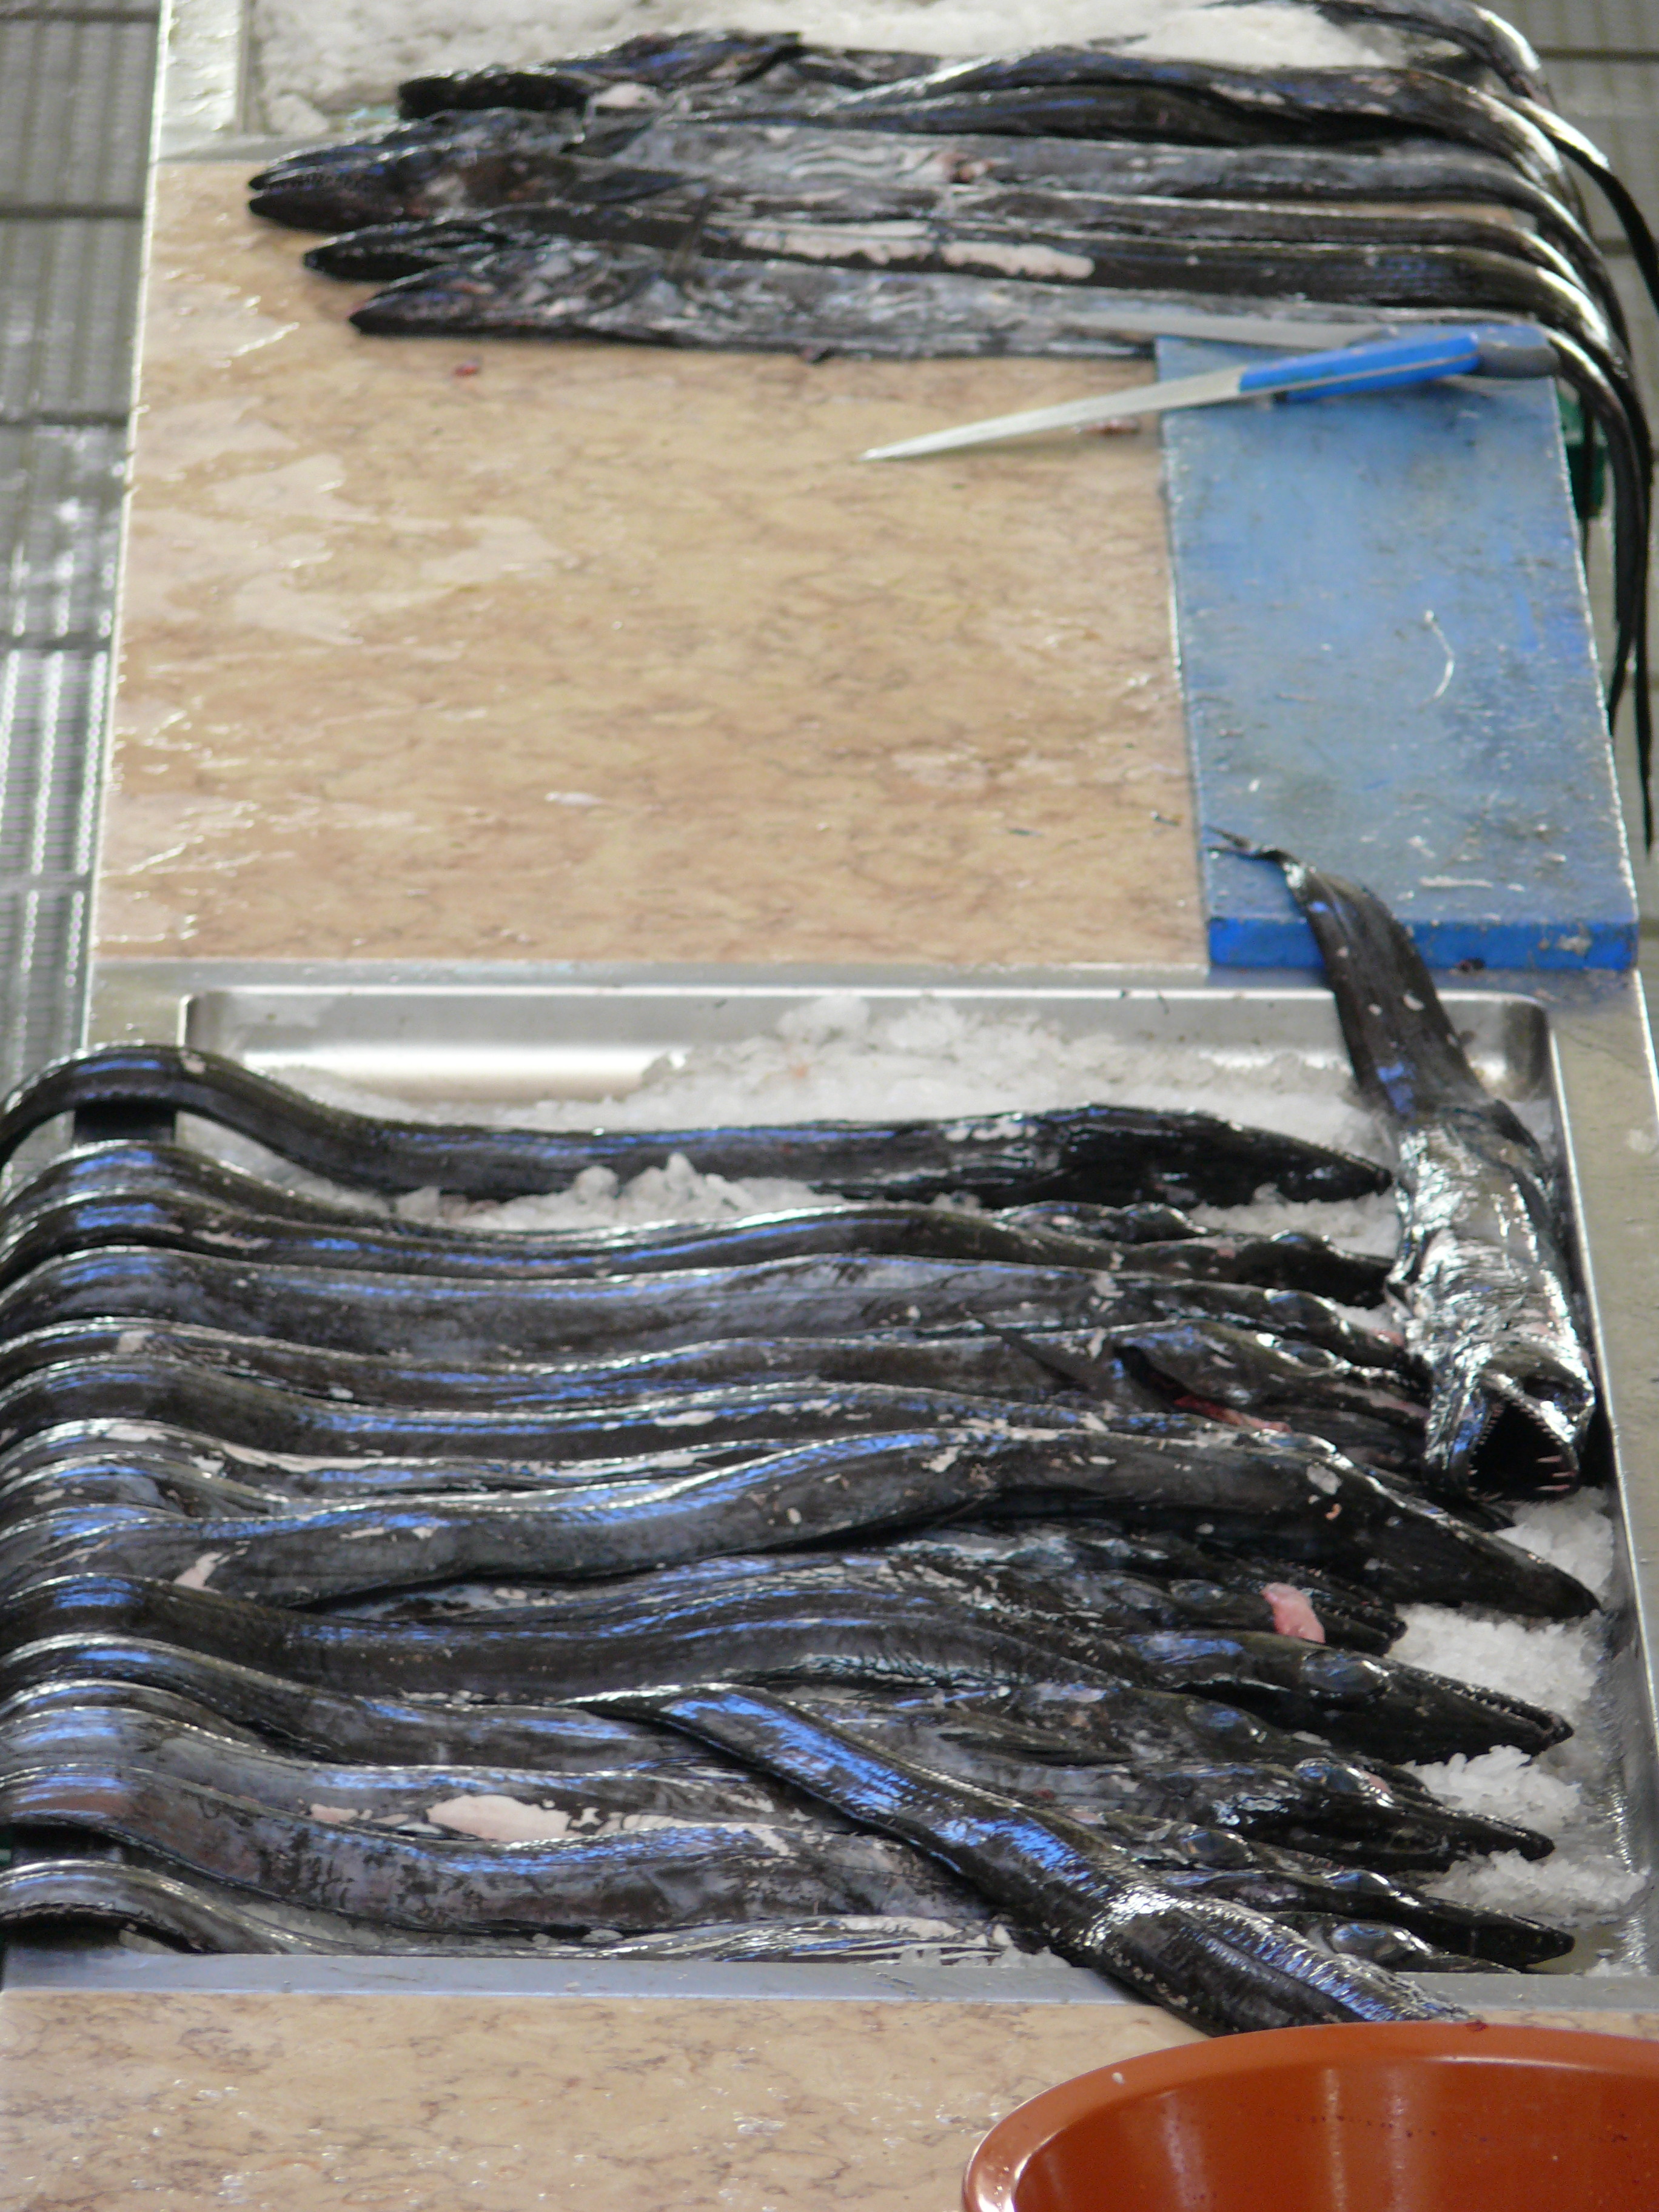 Madeira fish market